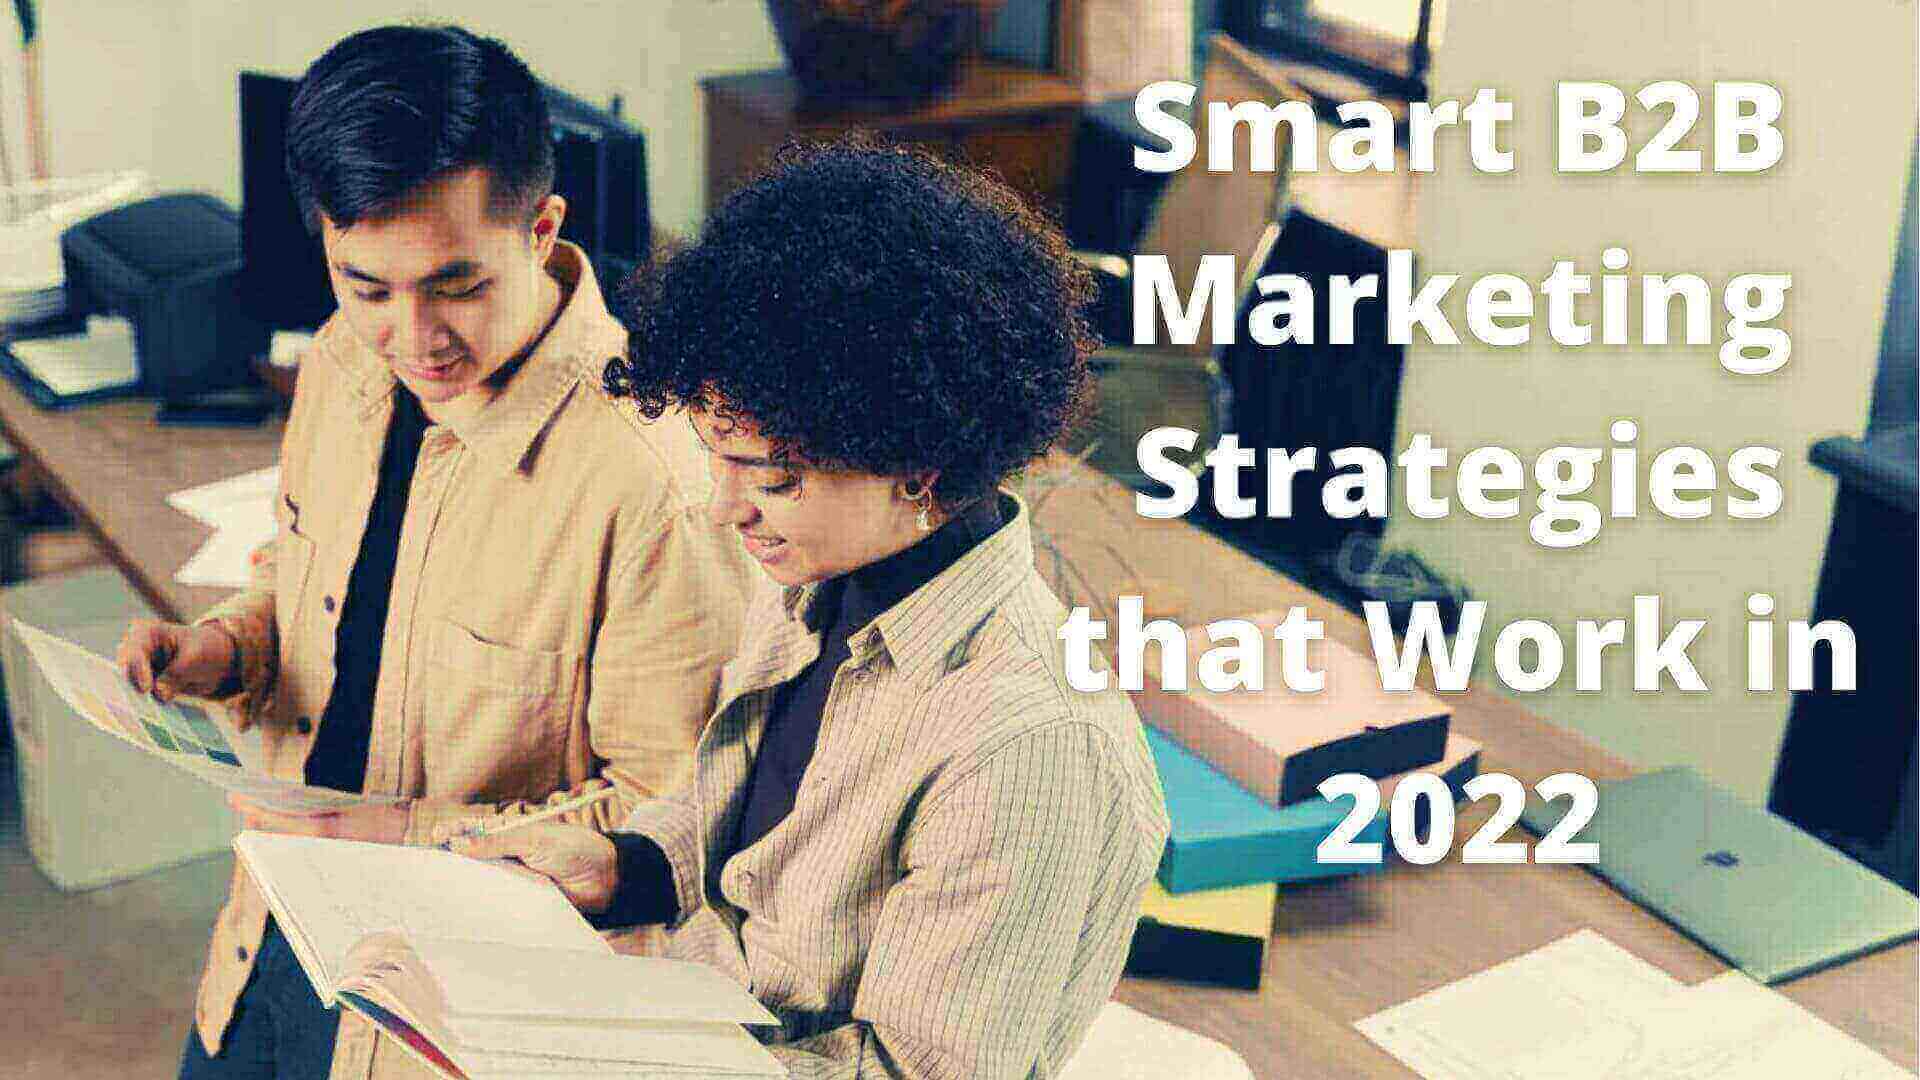 Smart B2B Marketing Strategies that Work in 2022